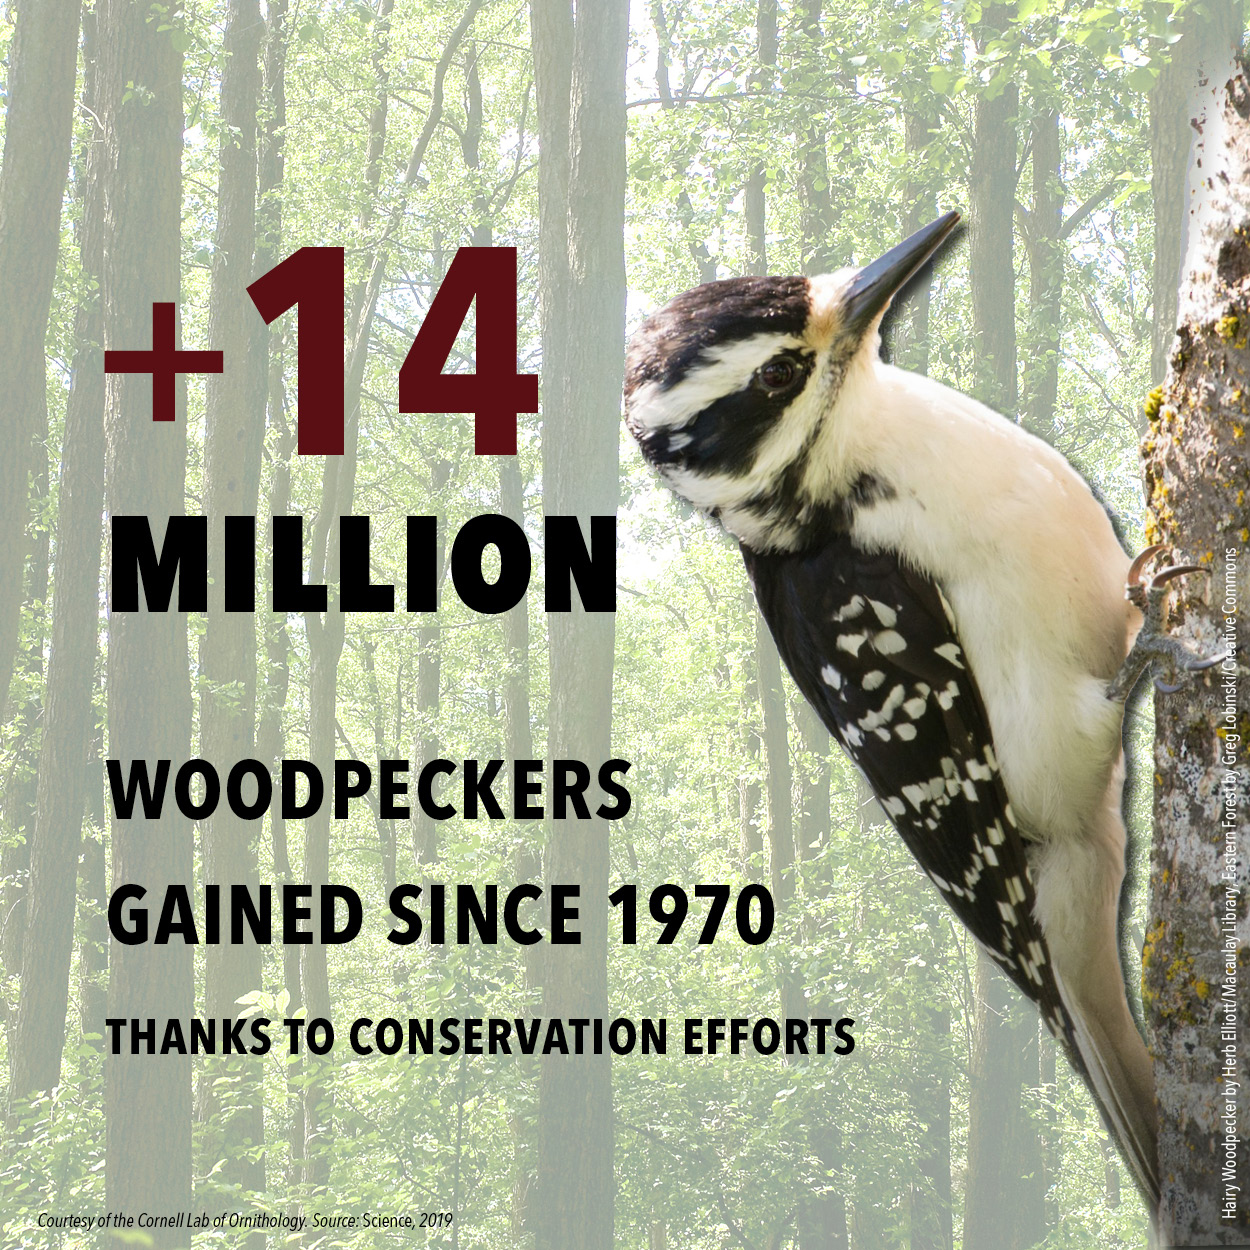 BirdDeclines-gains-woodpeckers.jpg